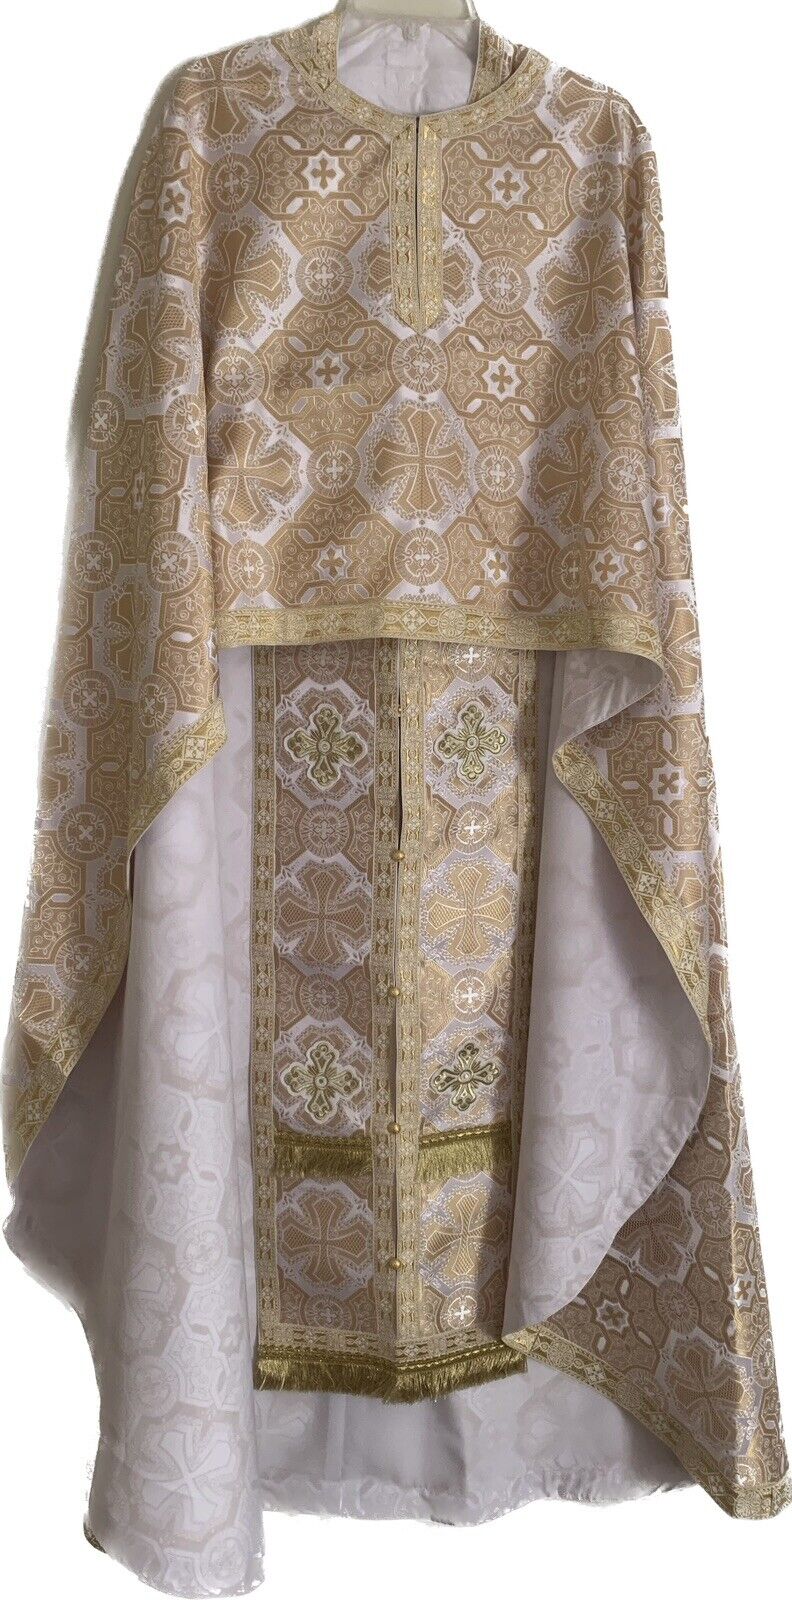 Orthodox Priest Vestment 7pc Set | White & Gold| Size XL, 57” Length